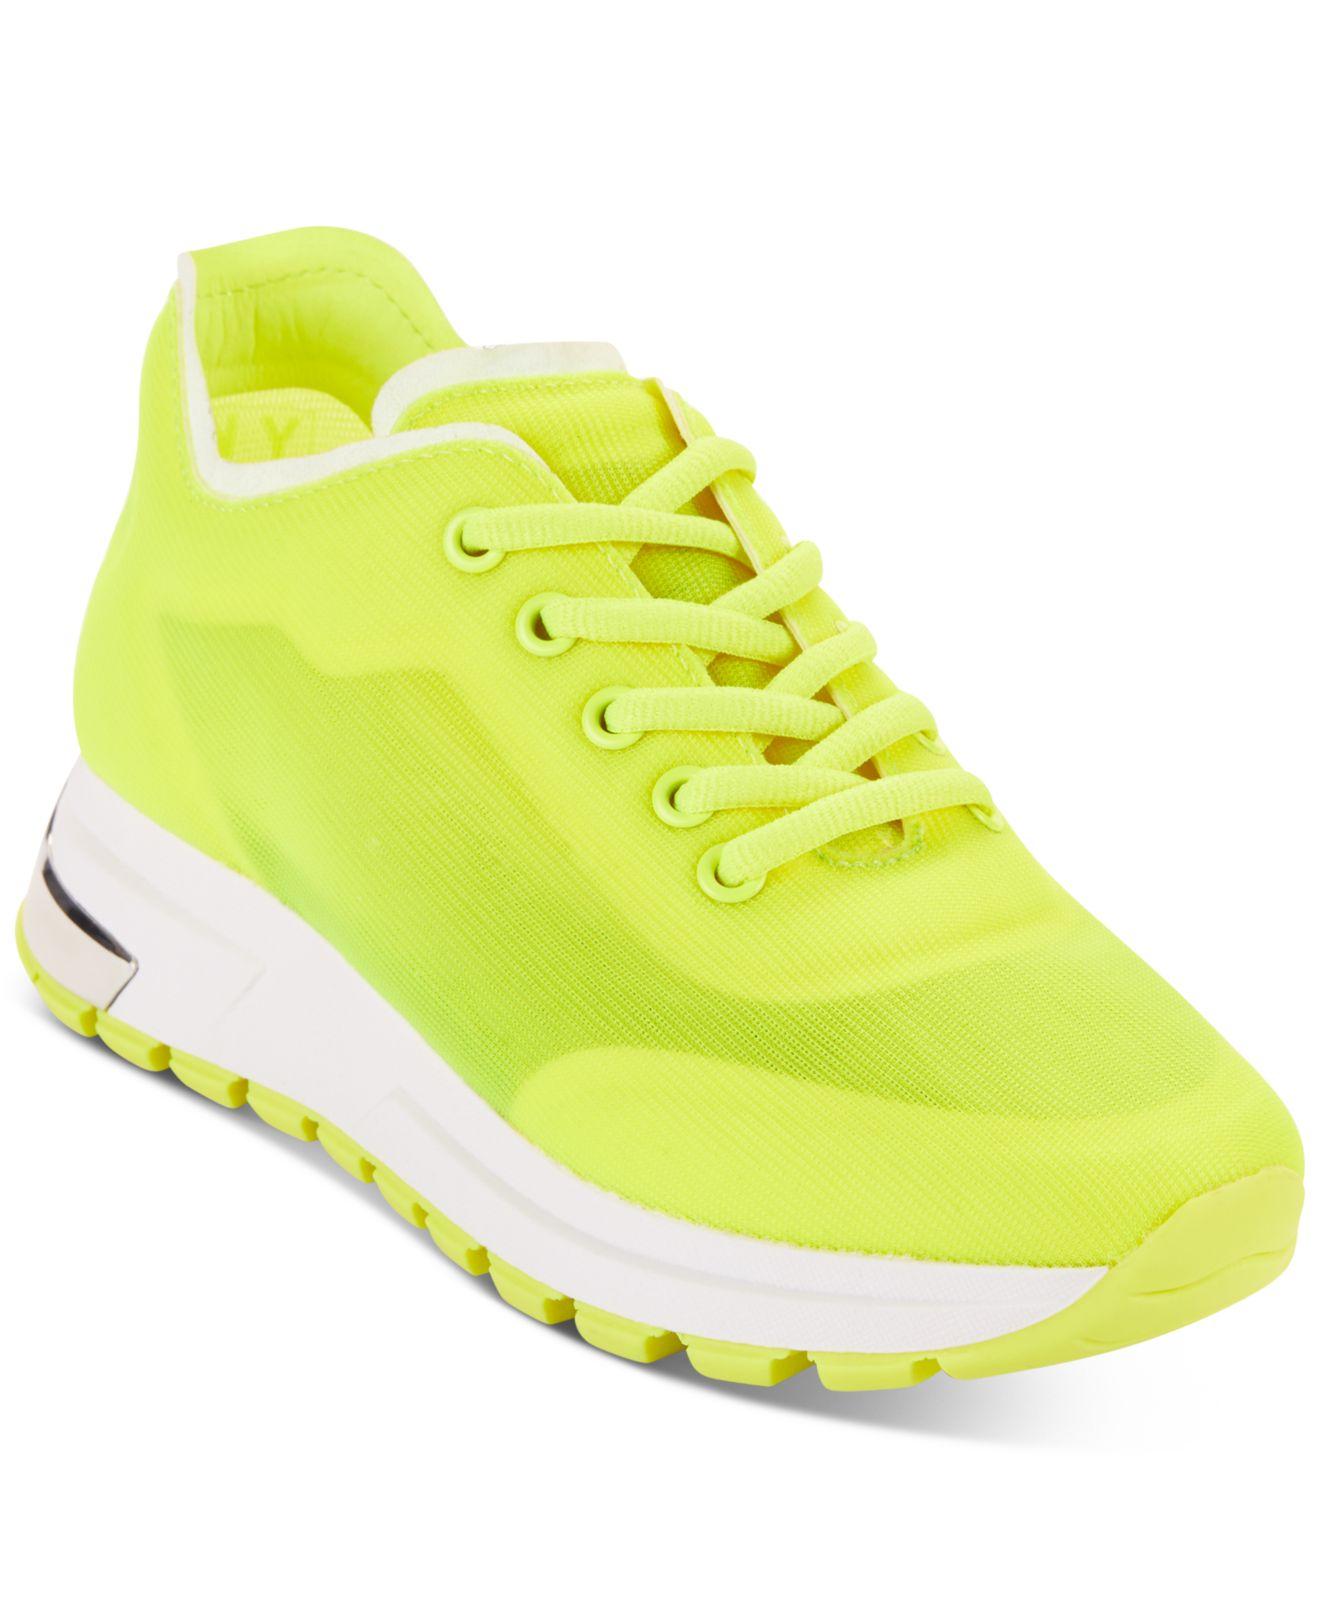 DKNY Mak Lace Up Sneakers in Neon Green (Green) | Lyst